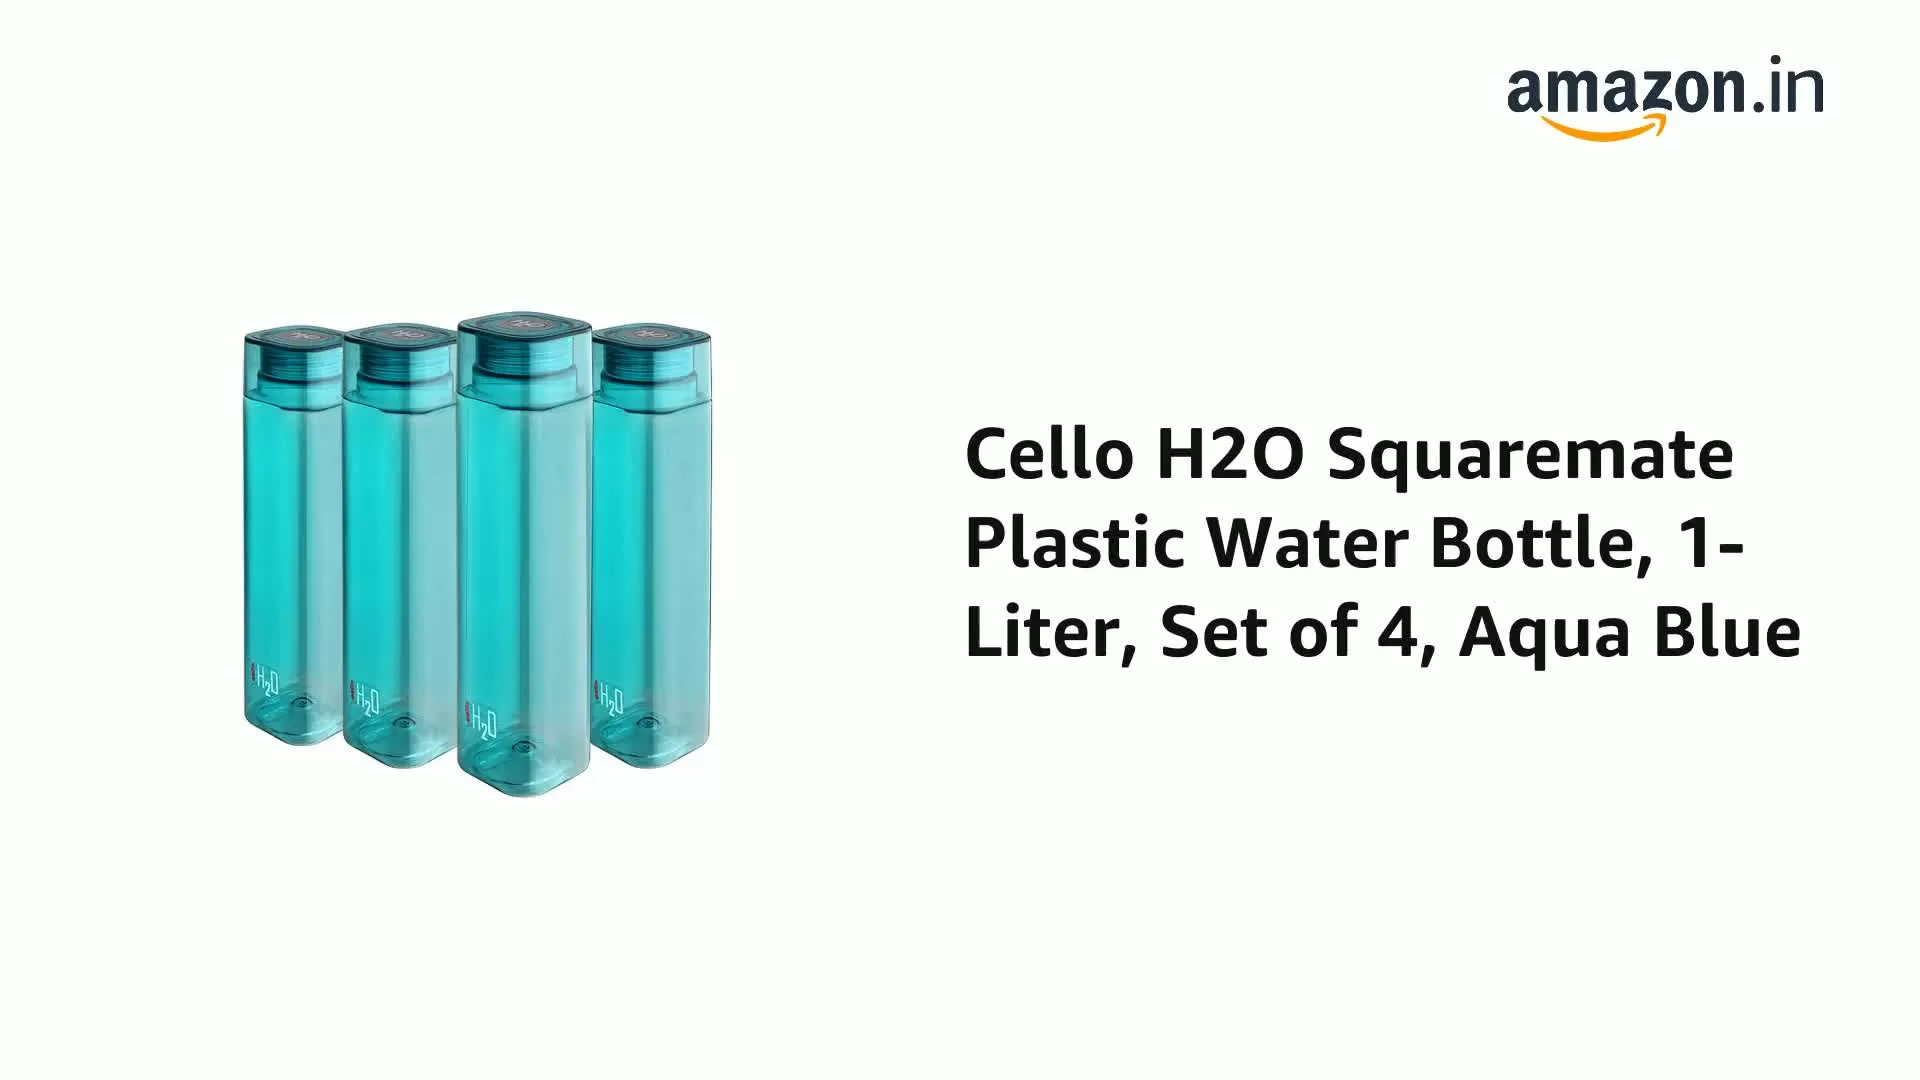 Cello H2O Squaremate Plastic Water Bottle 1-Liter Set of 4 Aqua Blue, 2 image